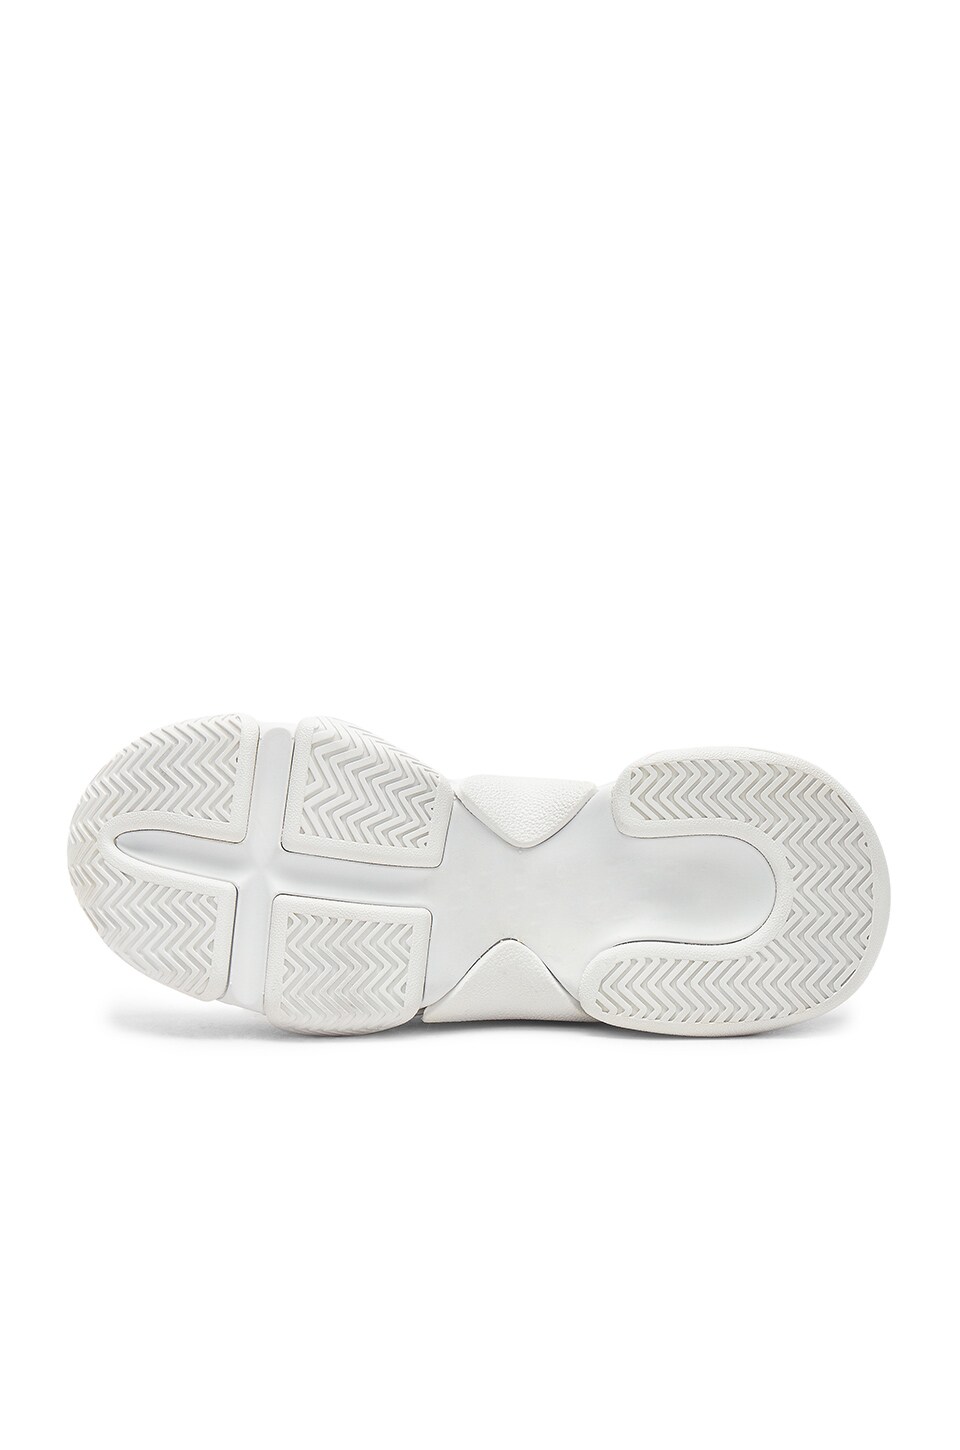 Jeffrey Campbell Lo-Fi Sneaker in White Mesh | REVOLVE